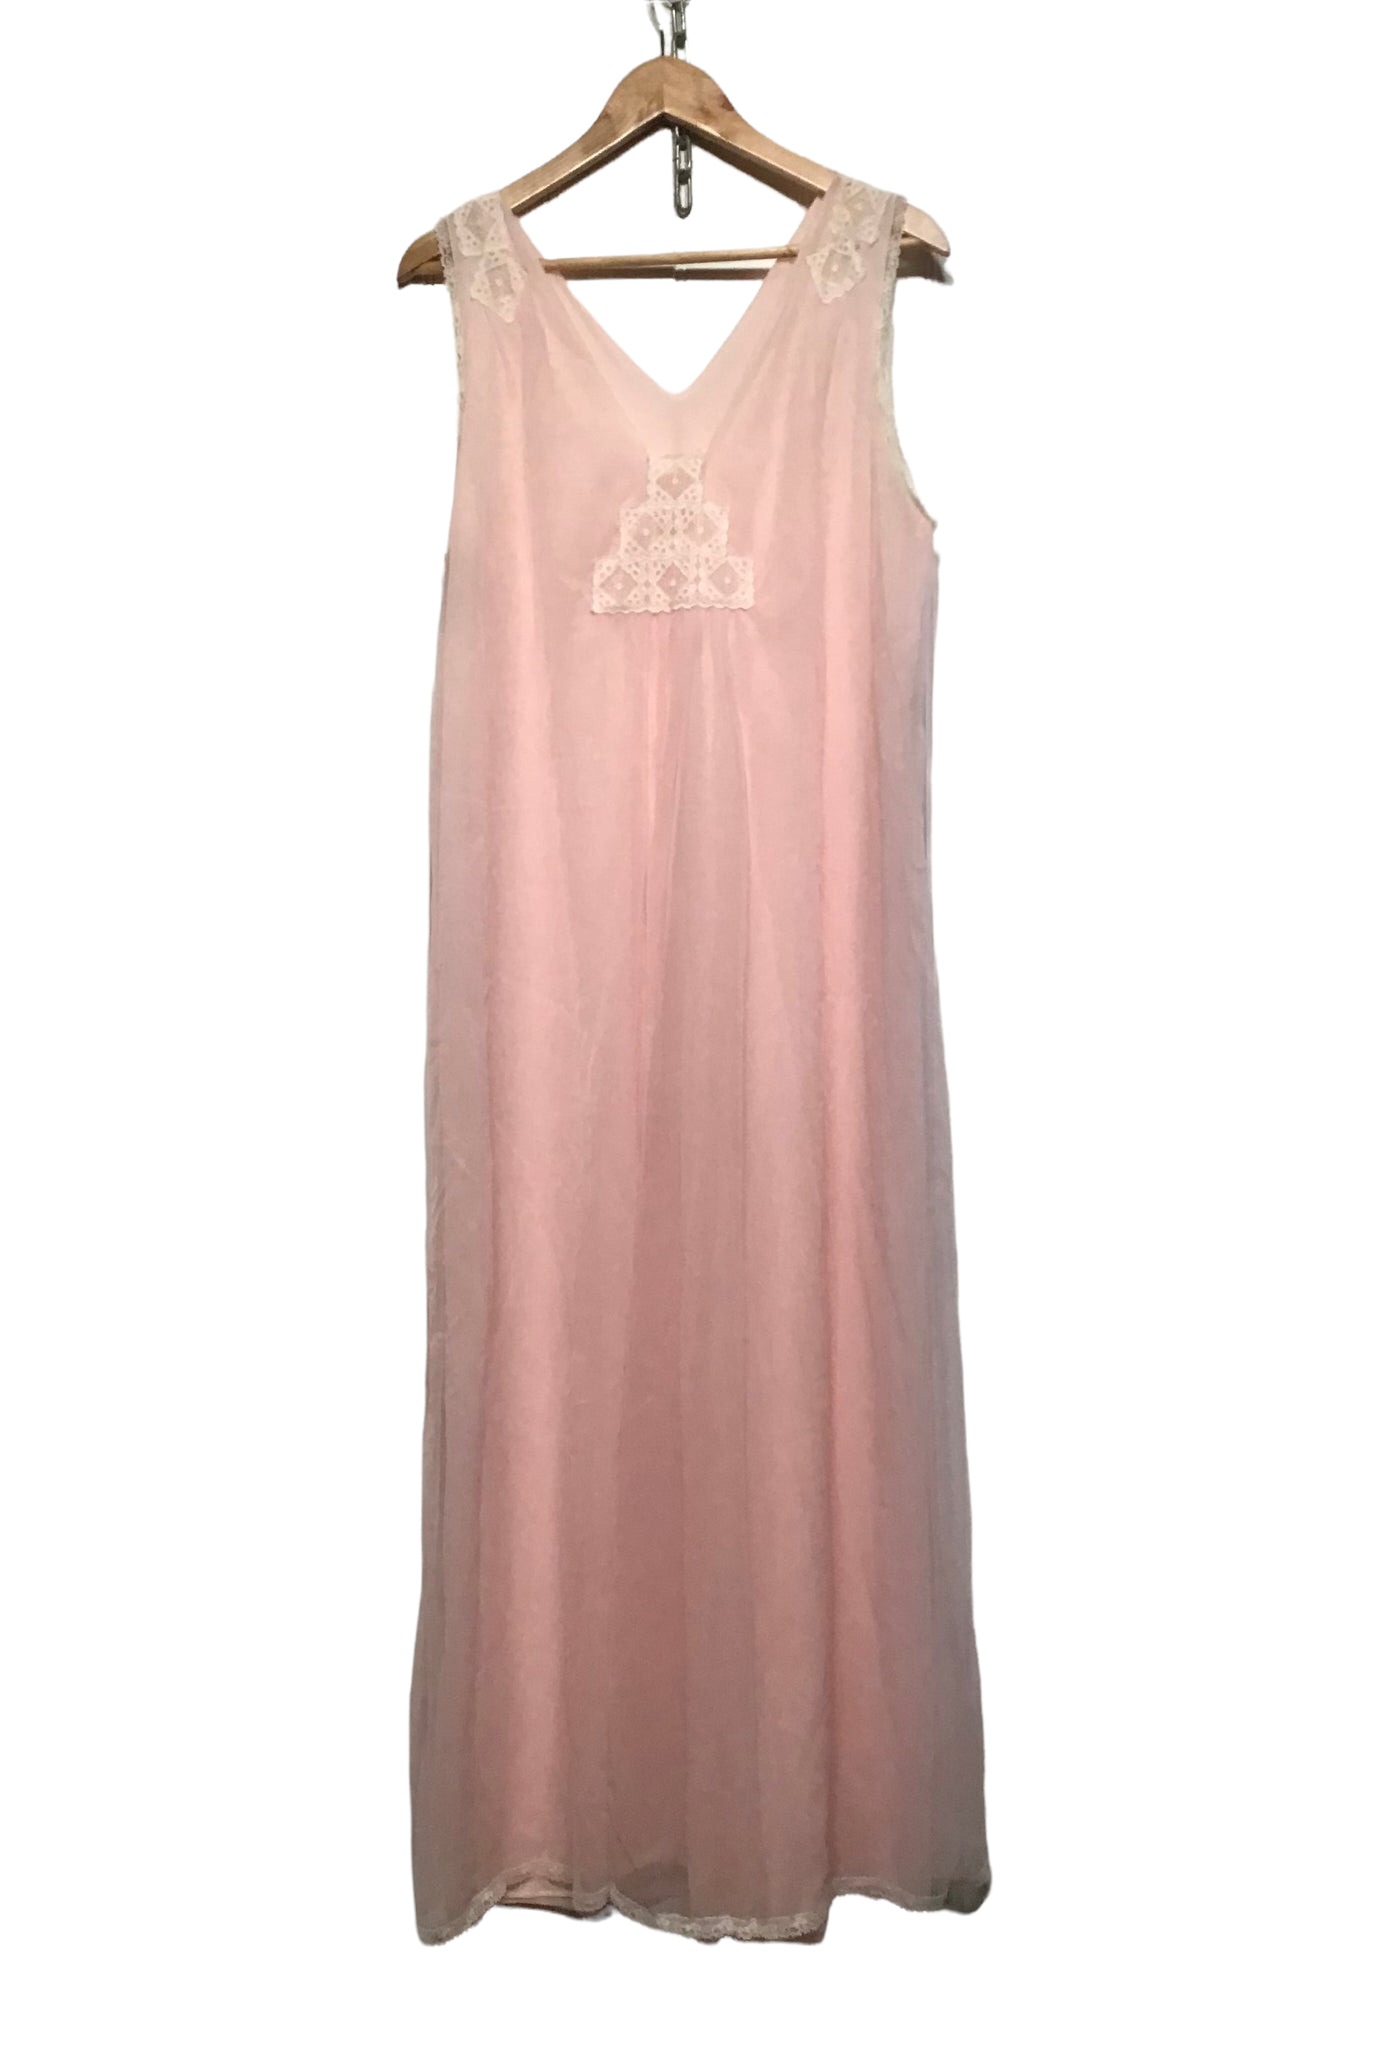 Pink Lace Maxi Dress (Size L)